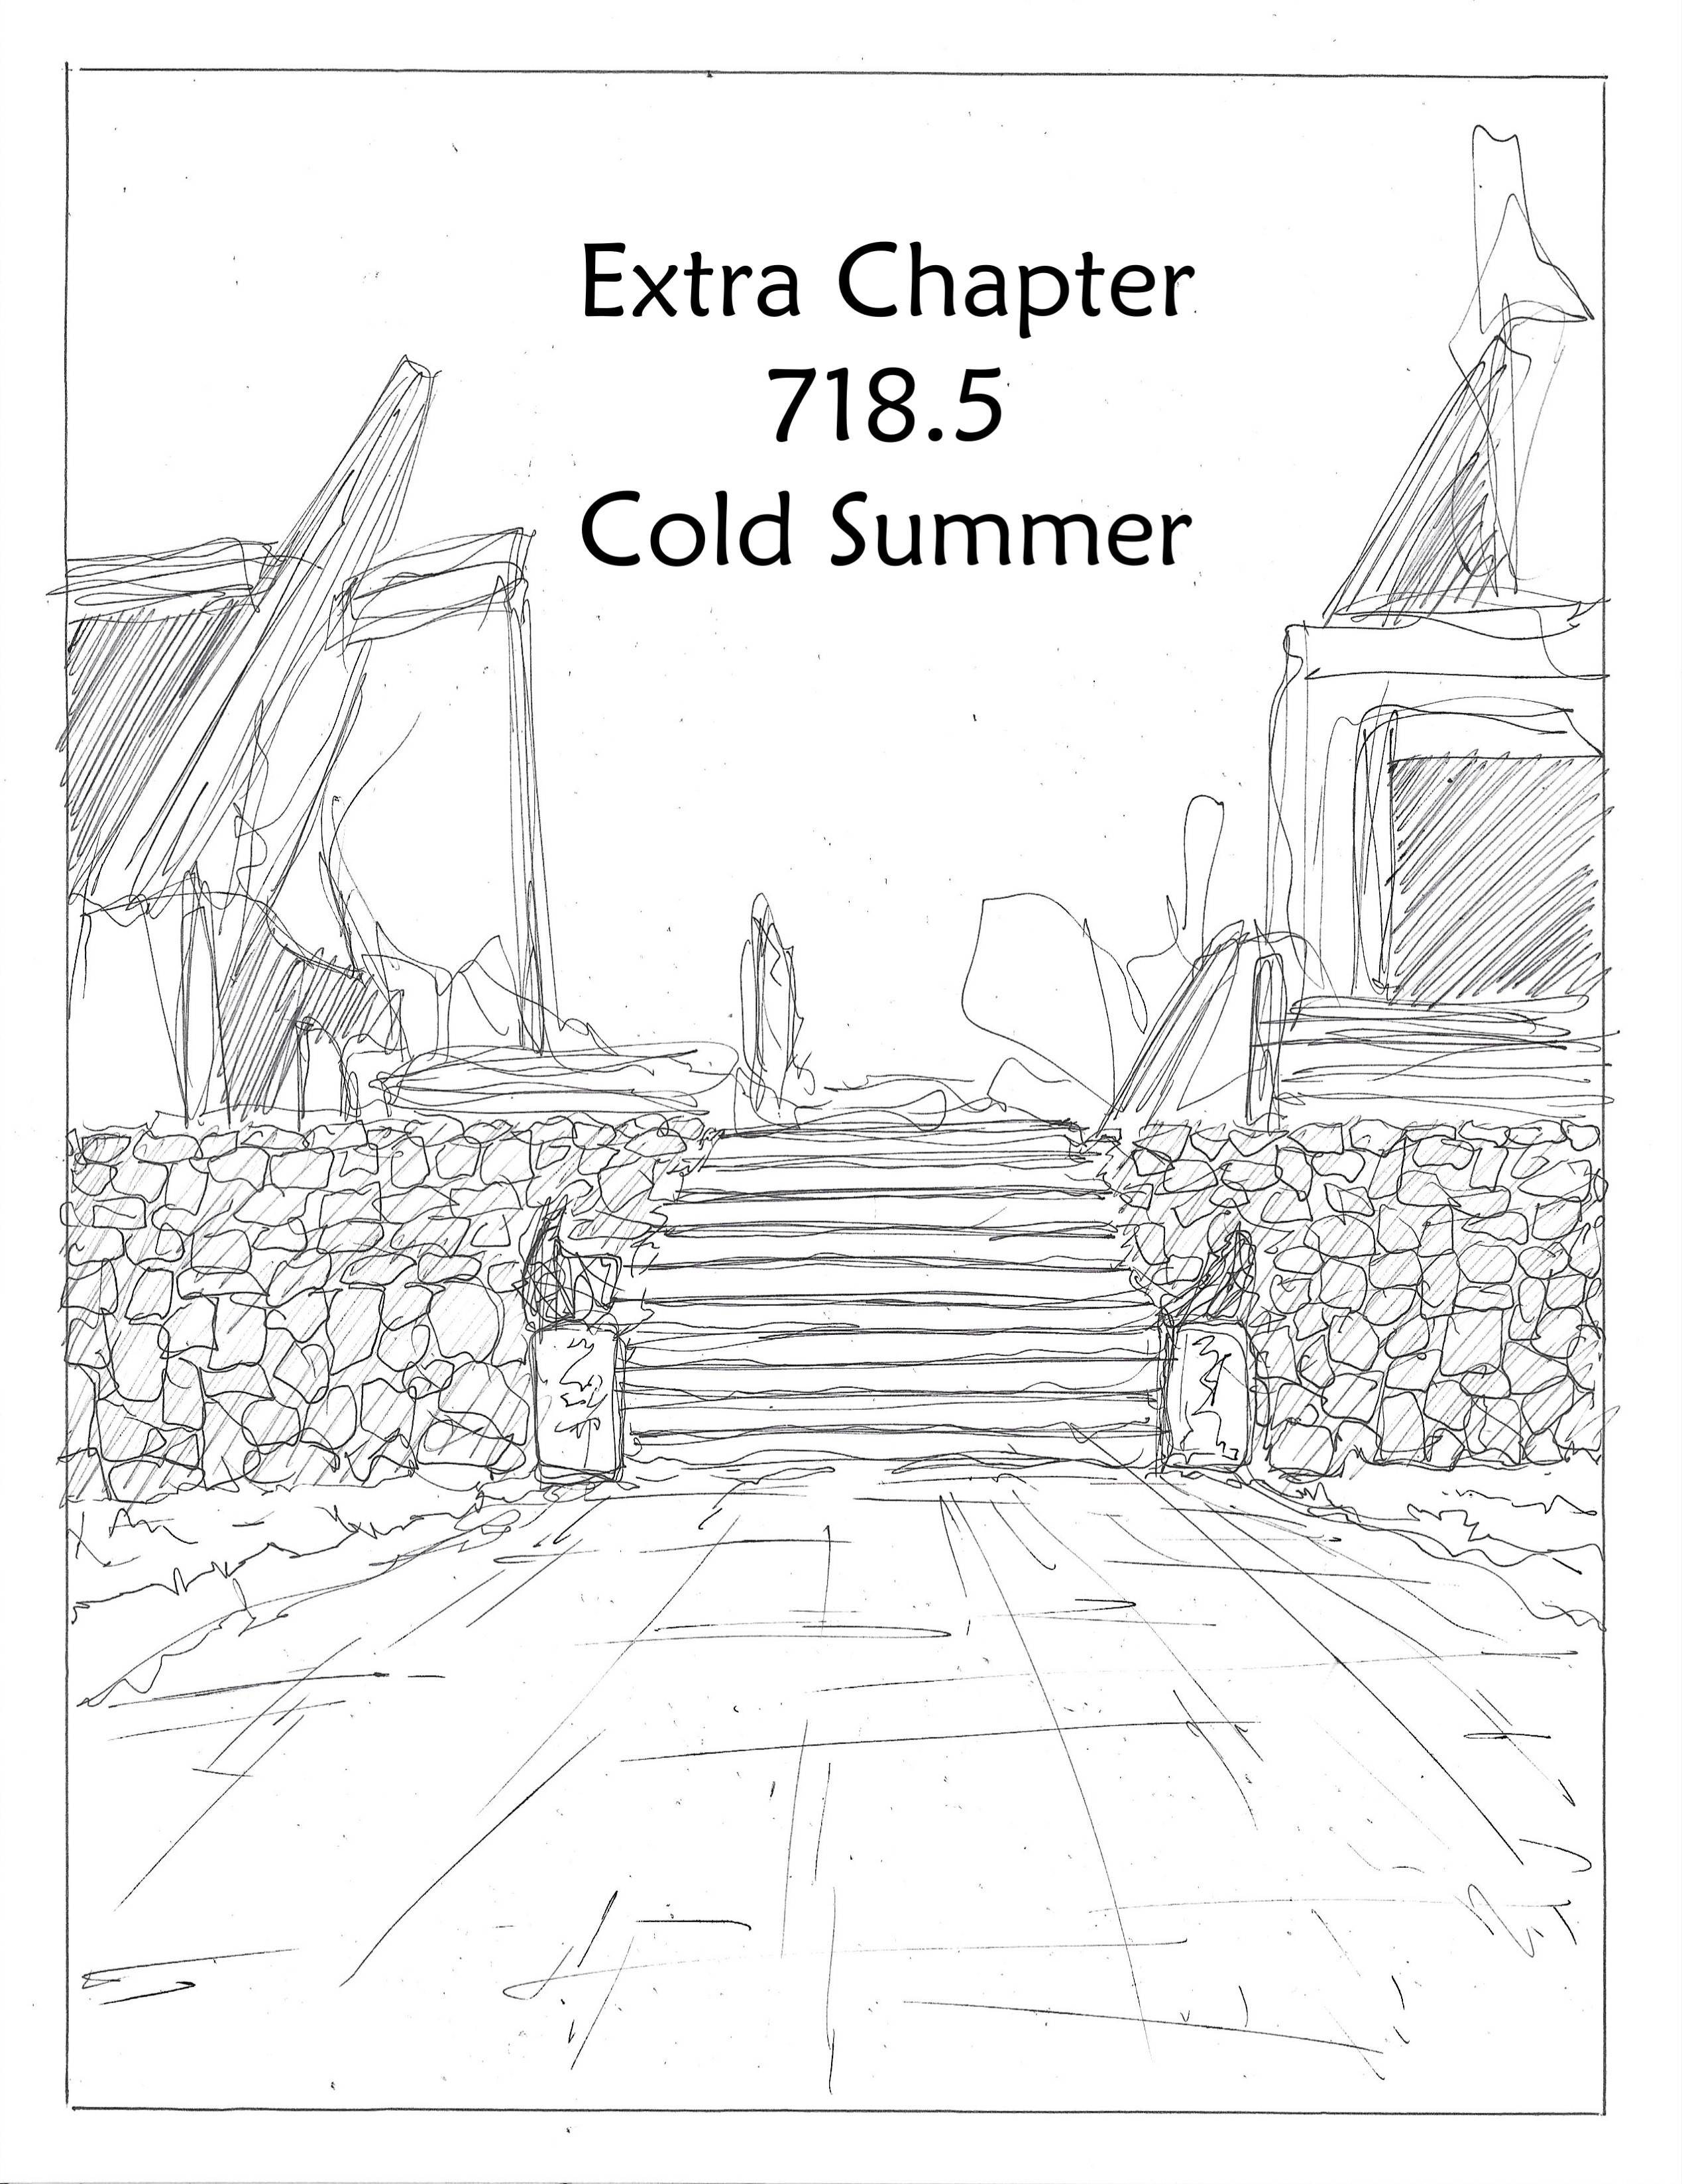 Sound Asleep: Forgotten Memories Vol.7 Chapter 718.5: Cold Summer - Picture 1